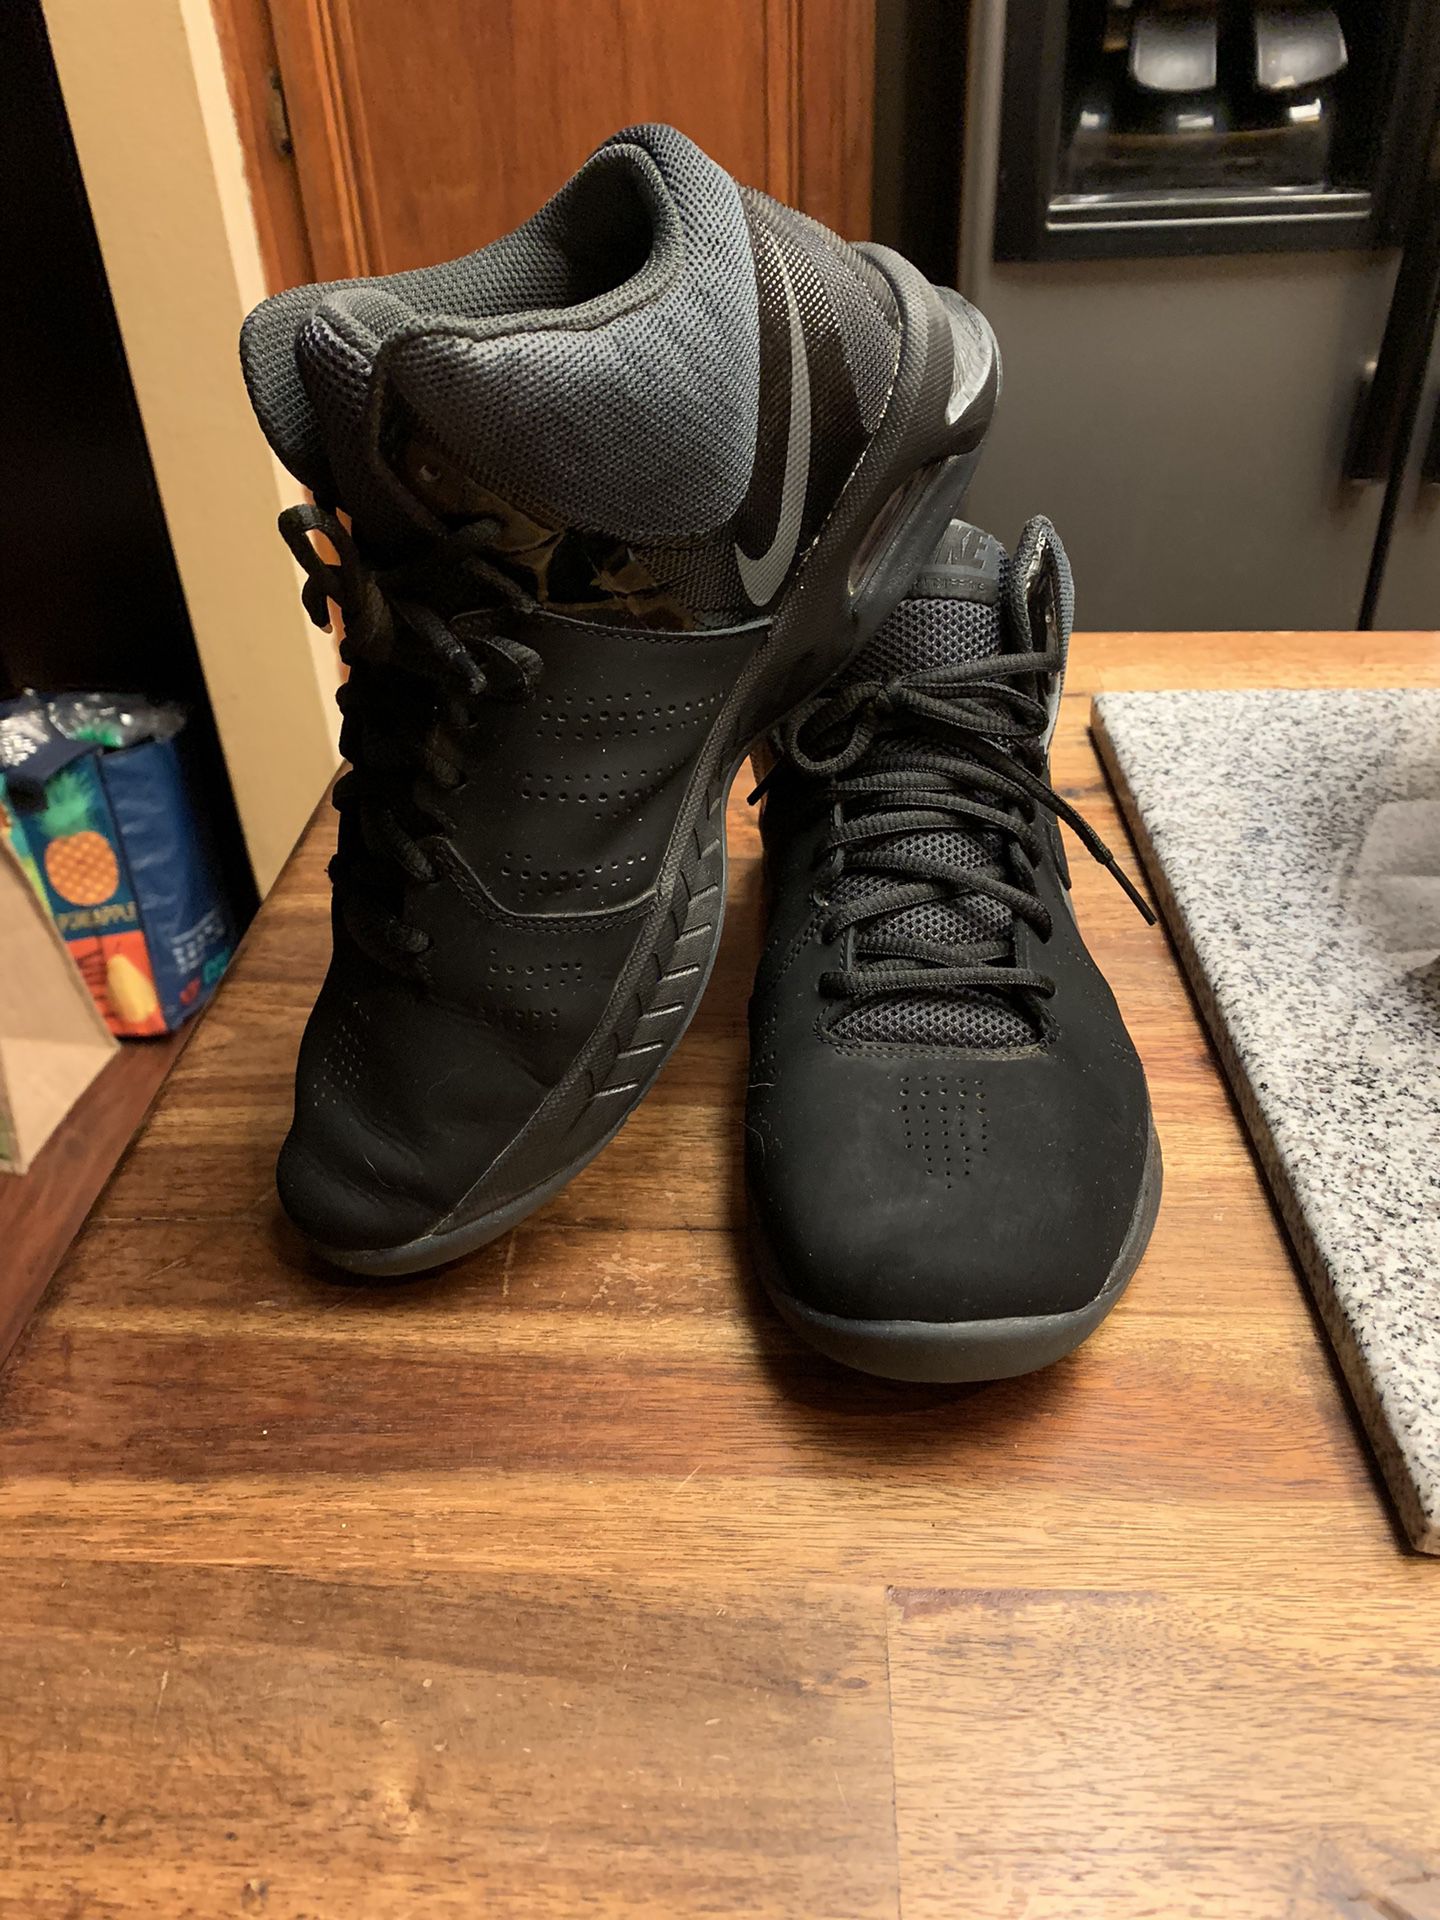 Men’s Nike tennis shoes, size 9 black mesh